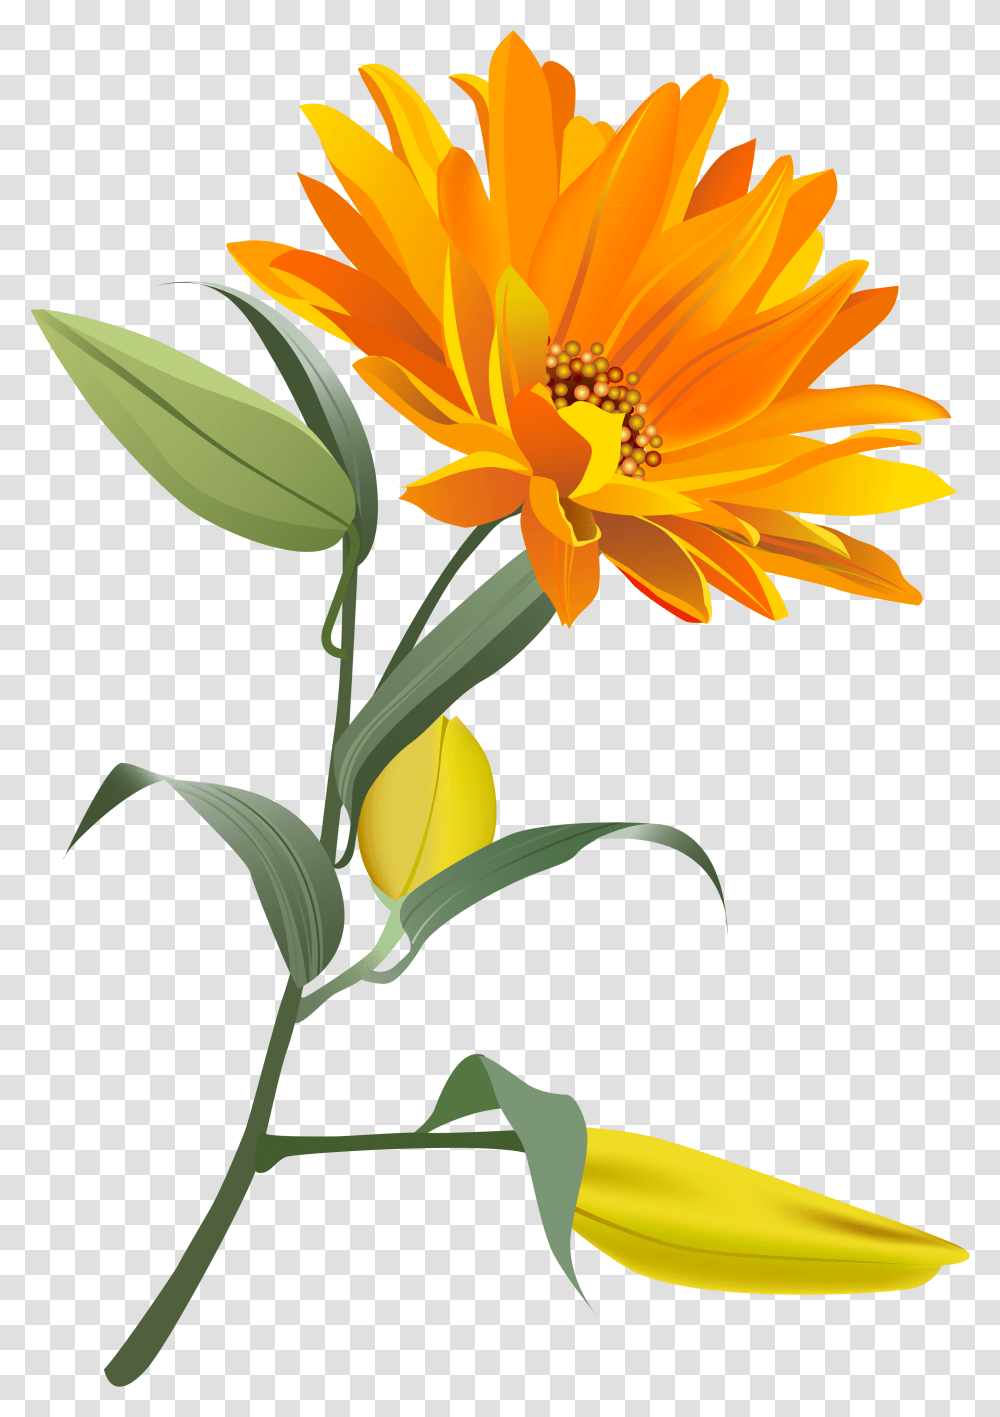 Orange Flower Clip Art Image Gallery Yopriceville Background Orange Flower, Plant, Blossom, Petal, Daisy Transparent Png